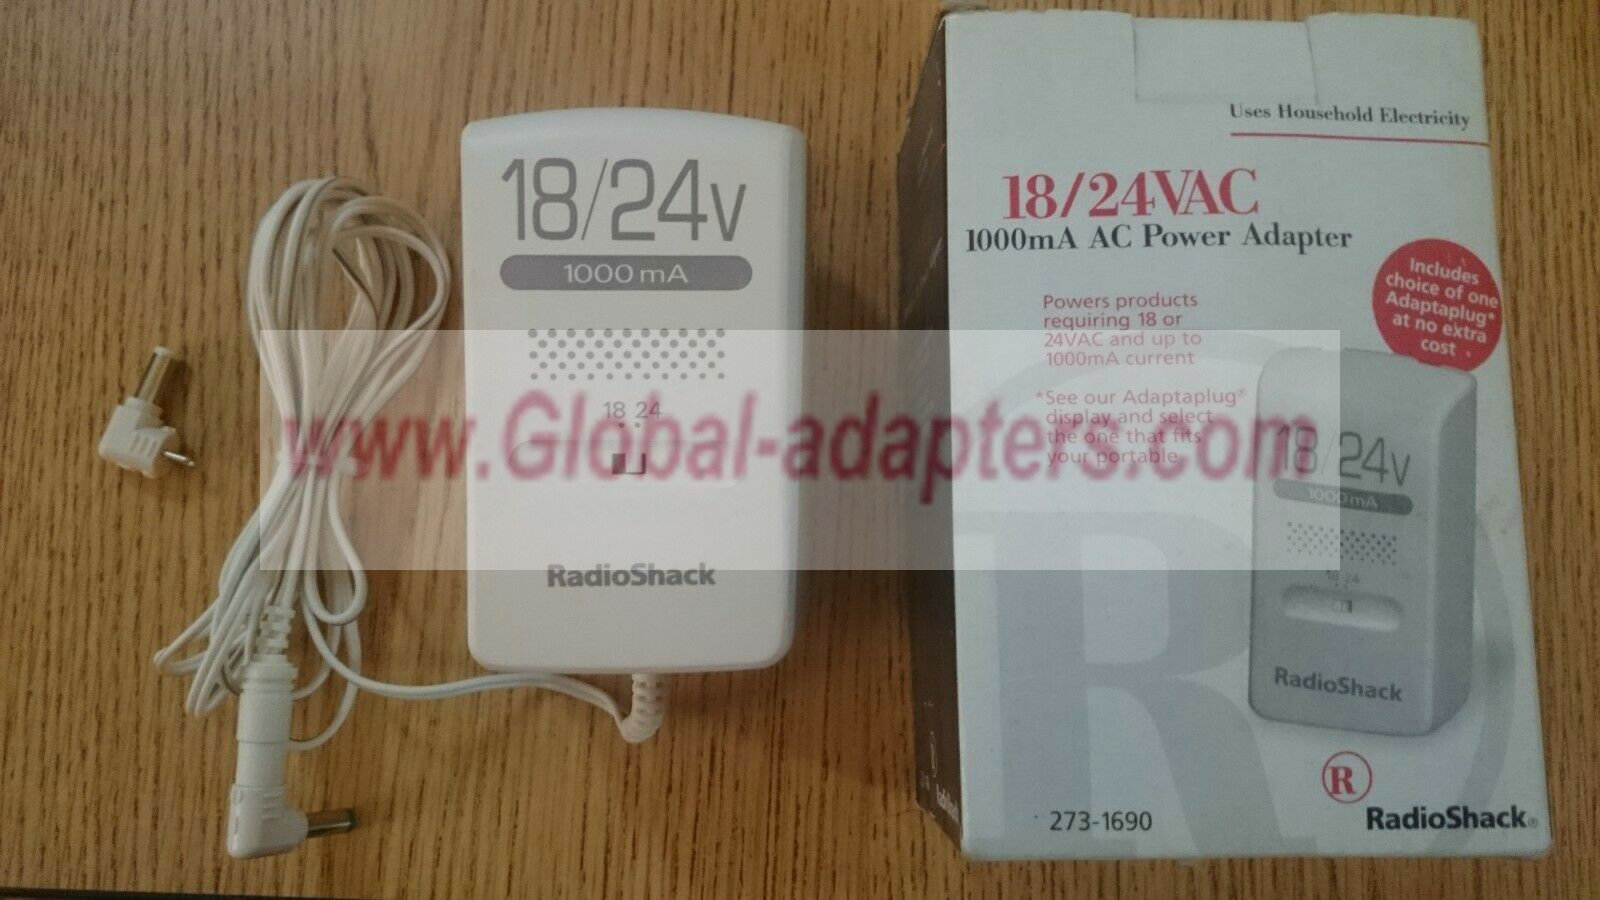 NEW 18/24VAC 1000mA RadioShack 273-1690 AC Adapter